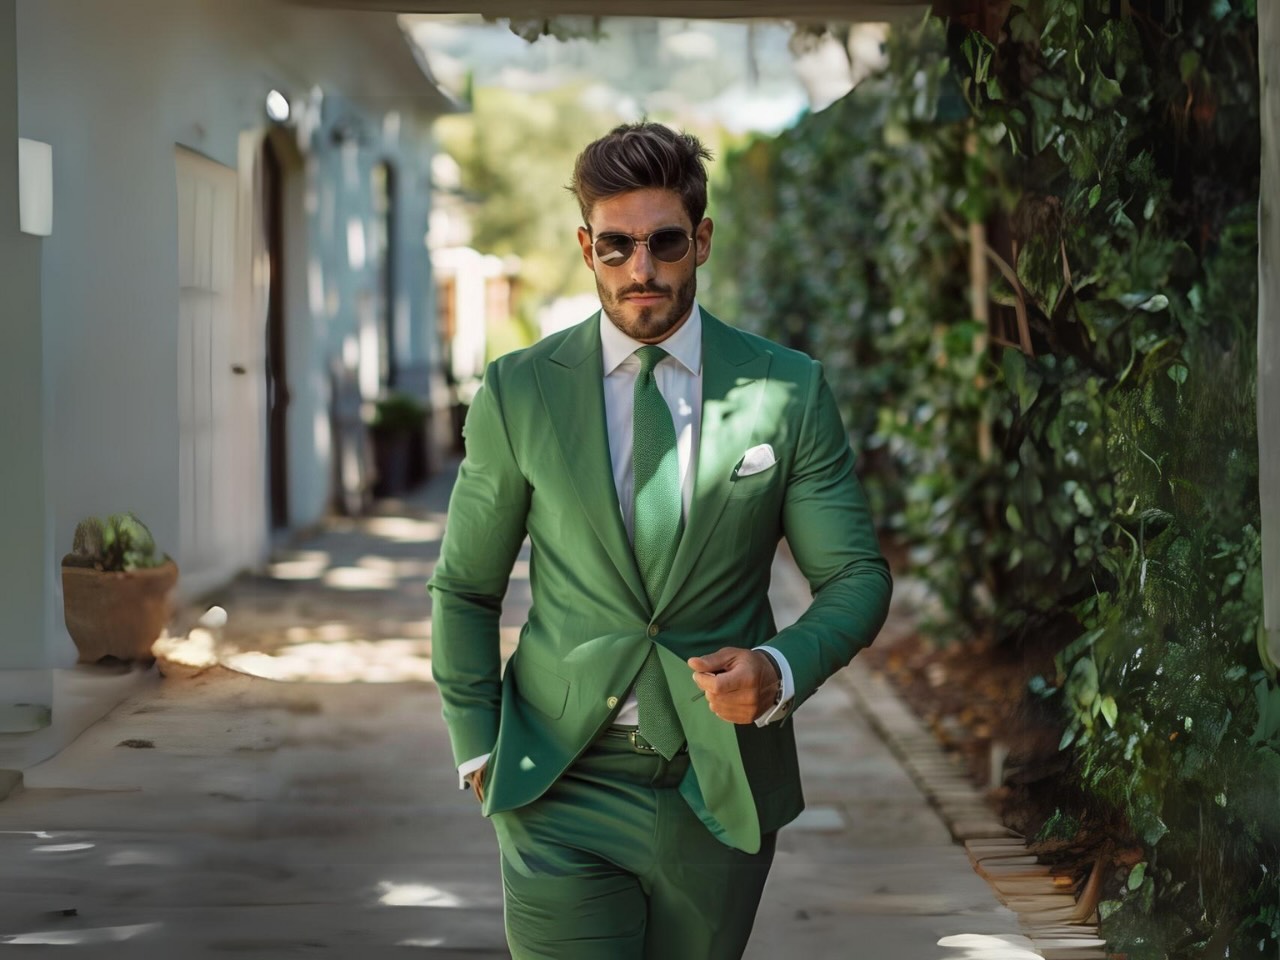 Hochzeitsanzug grün